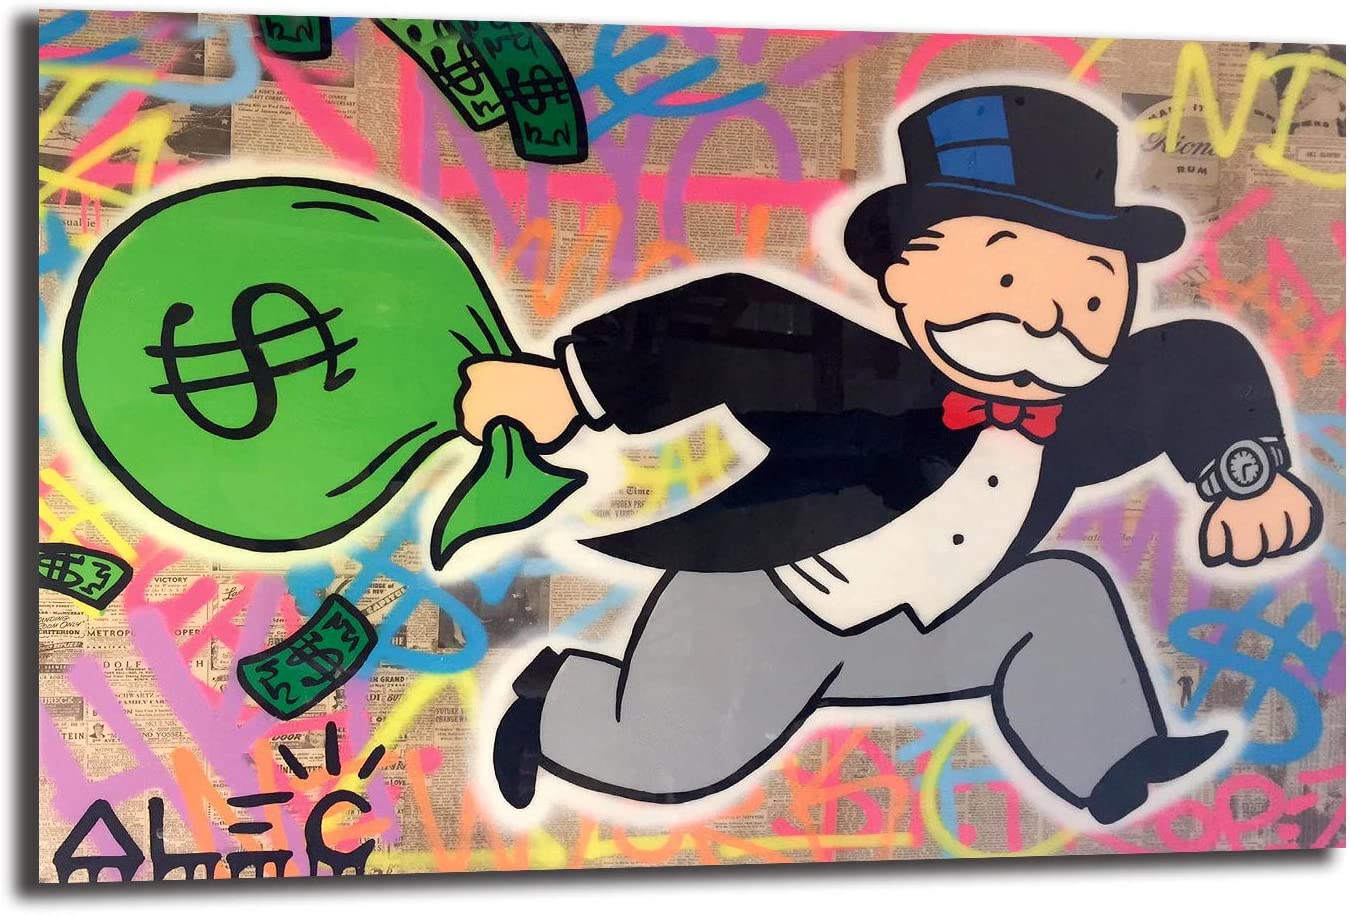 Monopoly Man Running With Money Bag Graffiti Street Art Canvas Painting Pos...